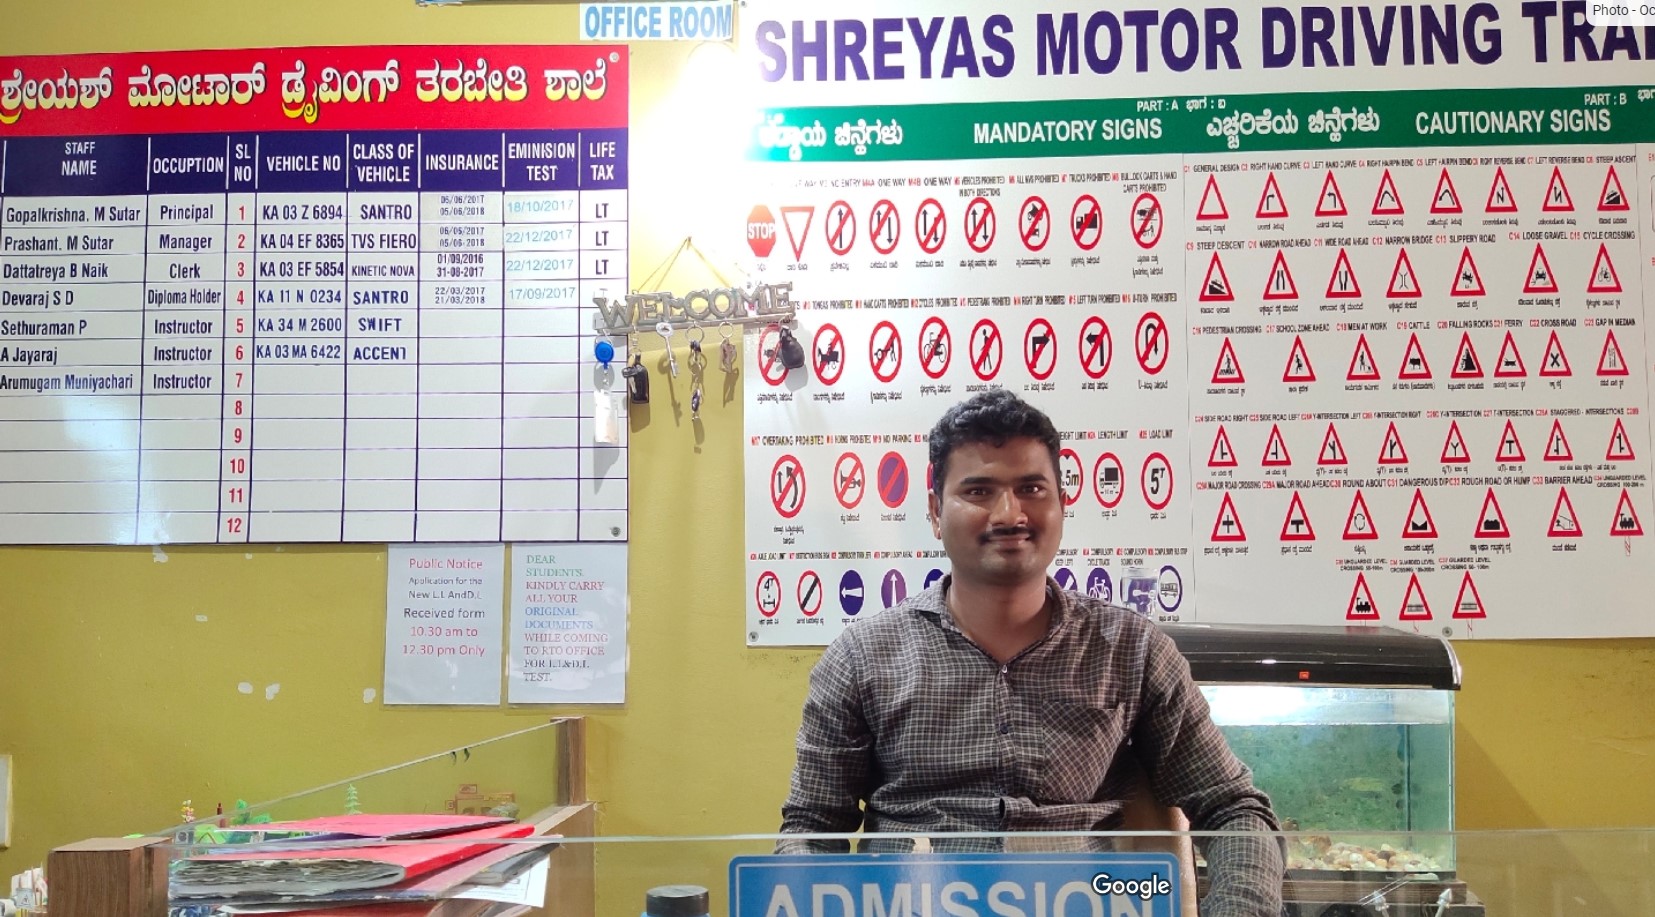 Shreyas Motor Driving School in Kaggadasapura